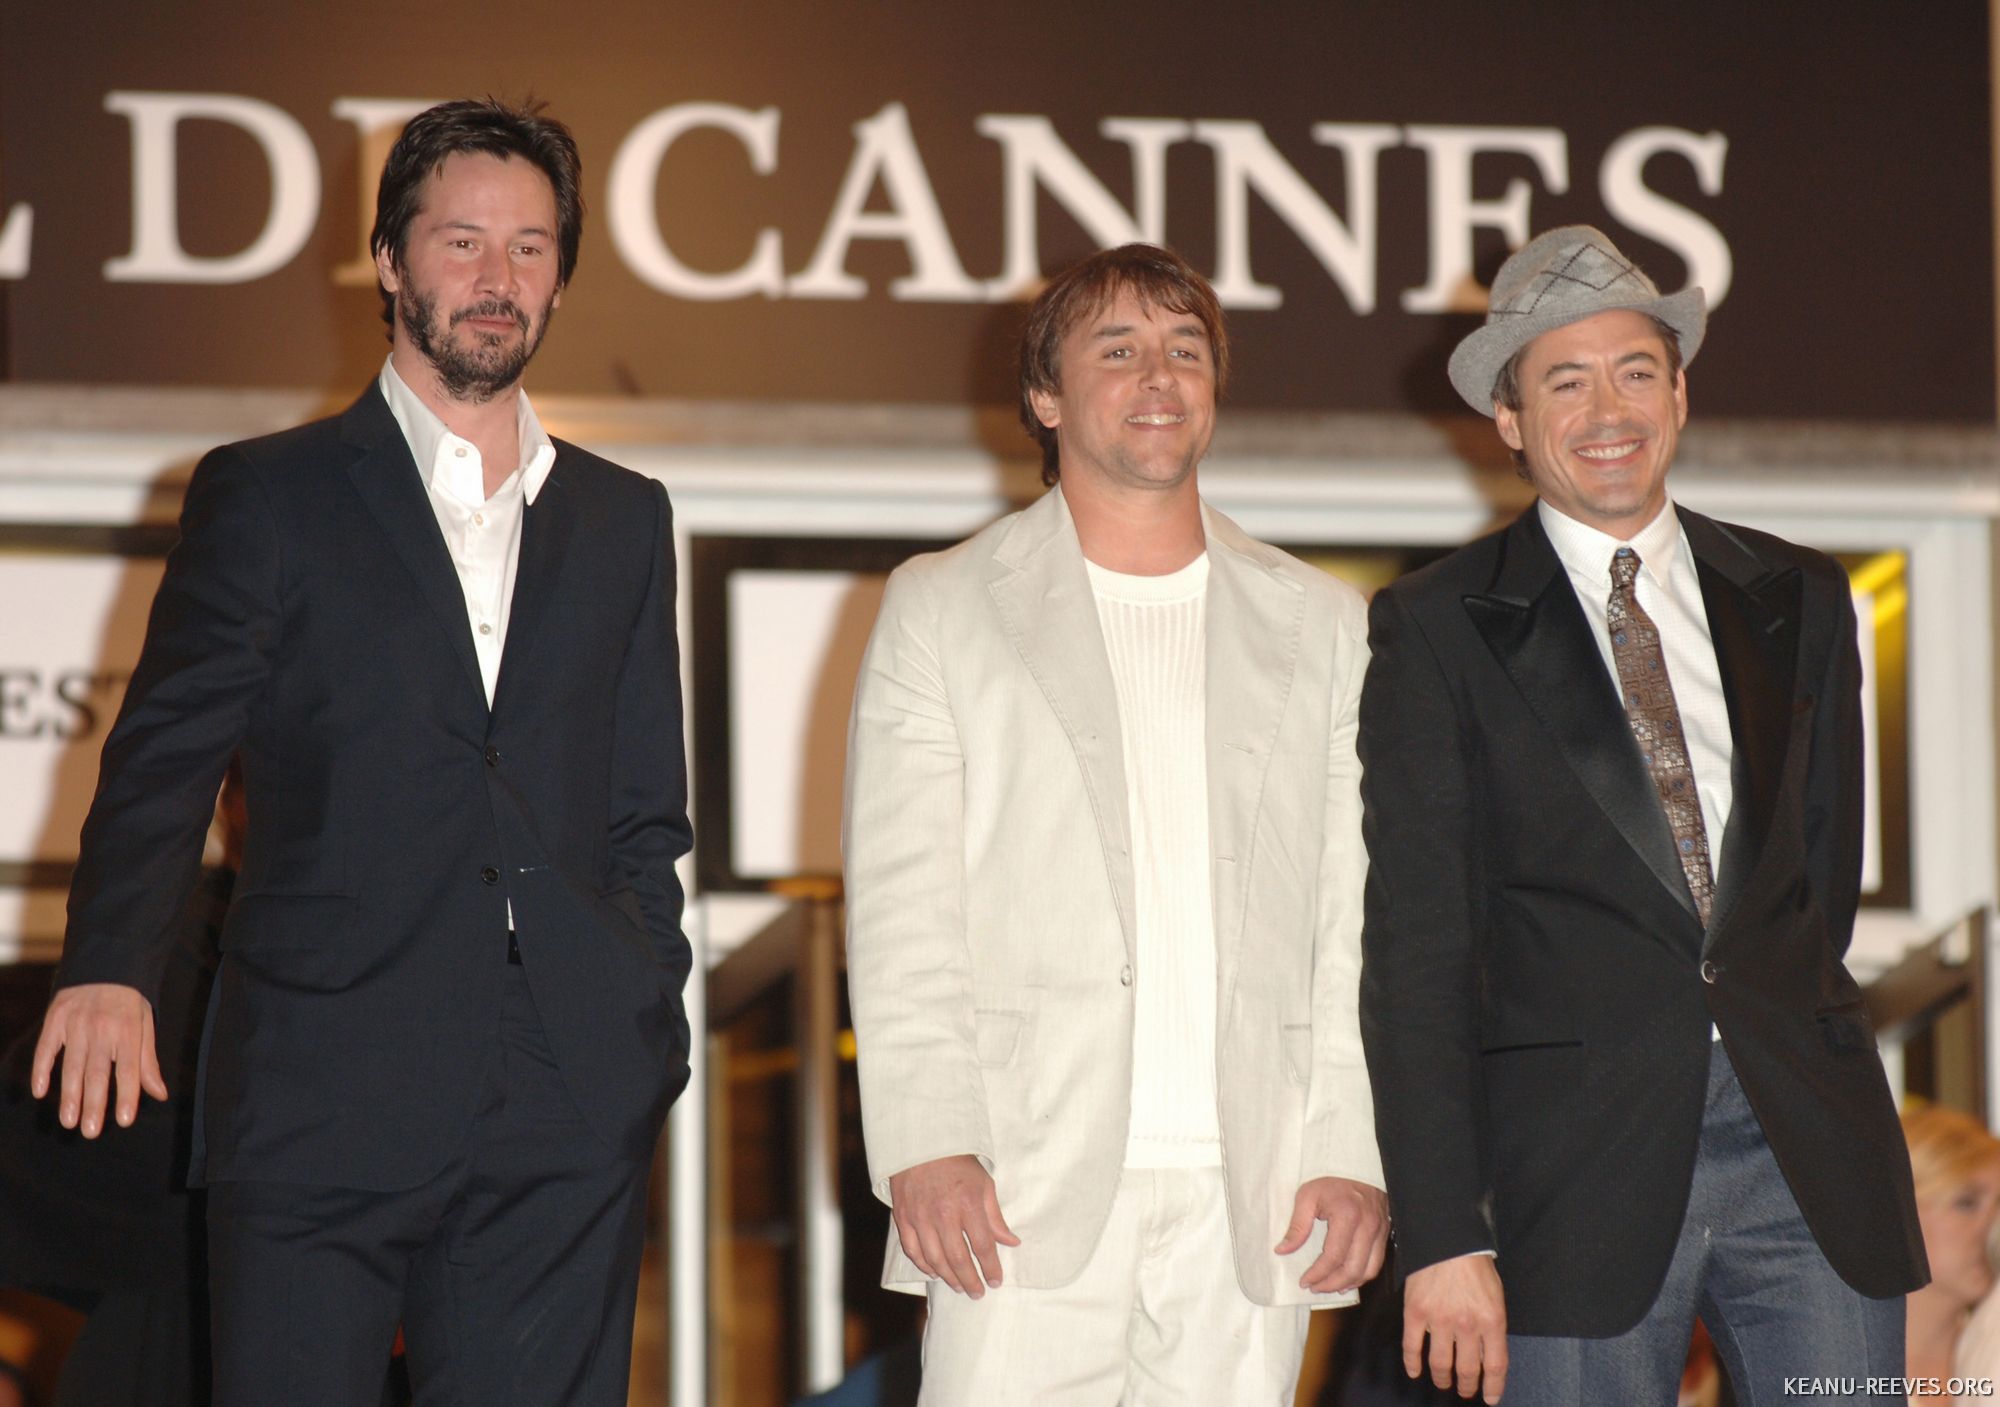 2006-05-25-Cannes-Film-Festival-A-Scanner-Darkly-Premiere-012.jpg